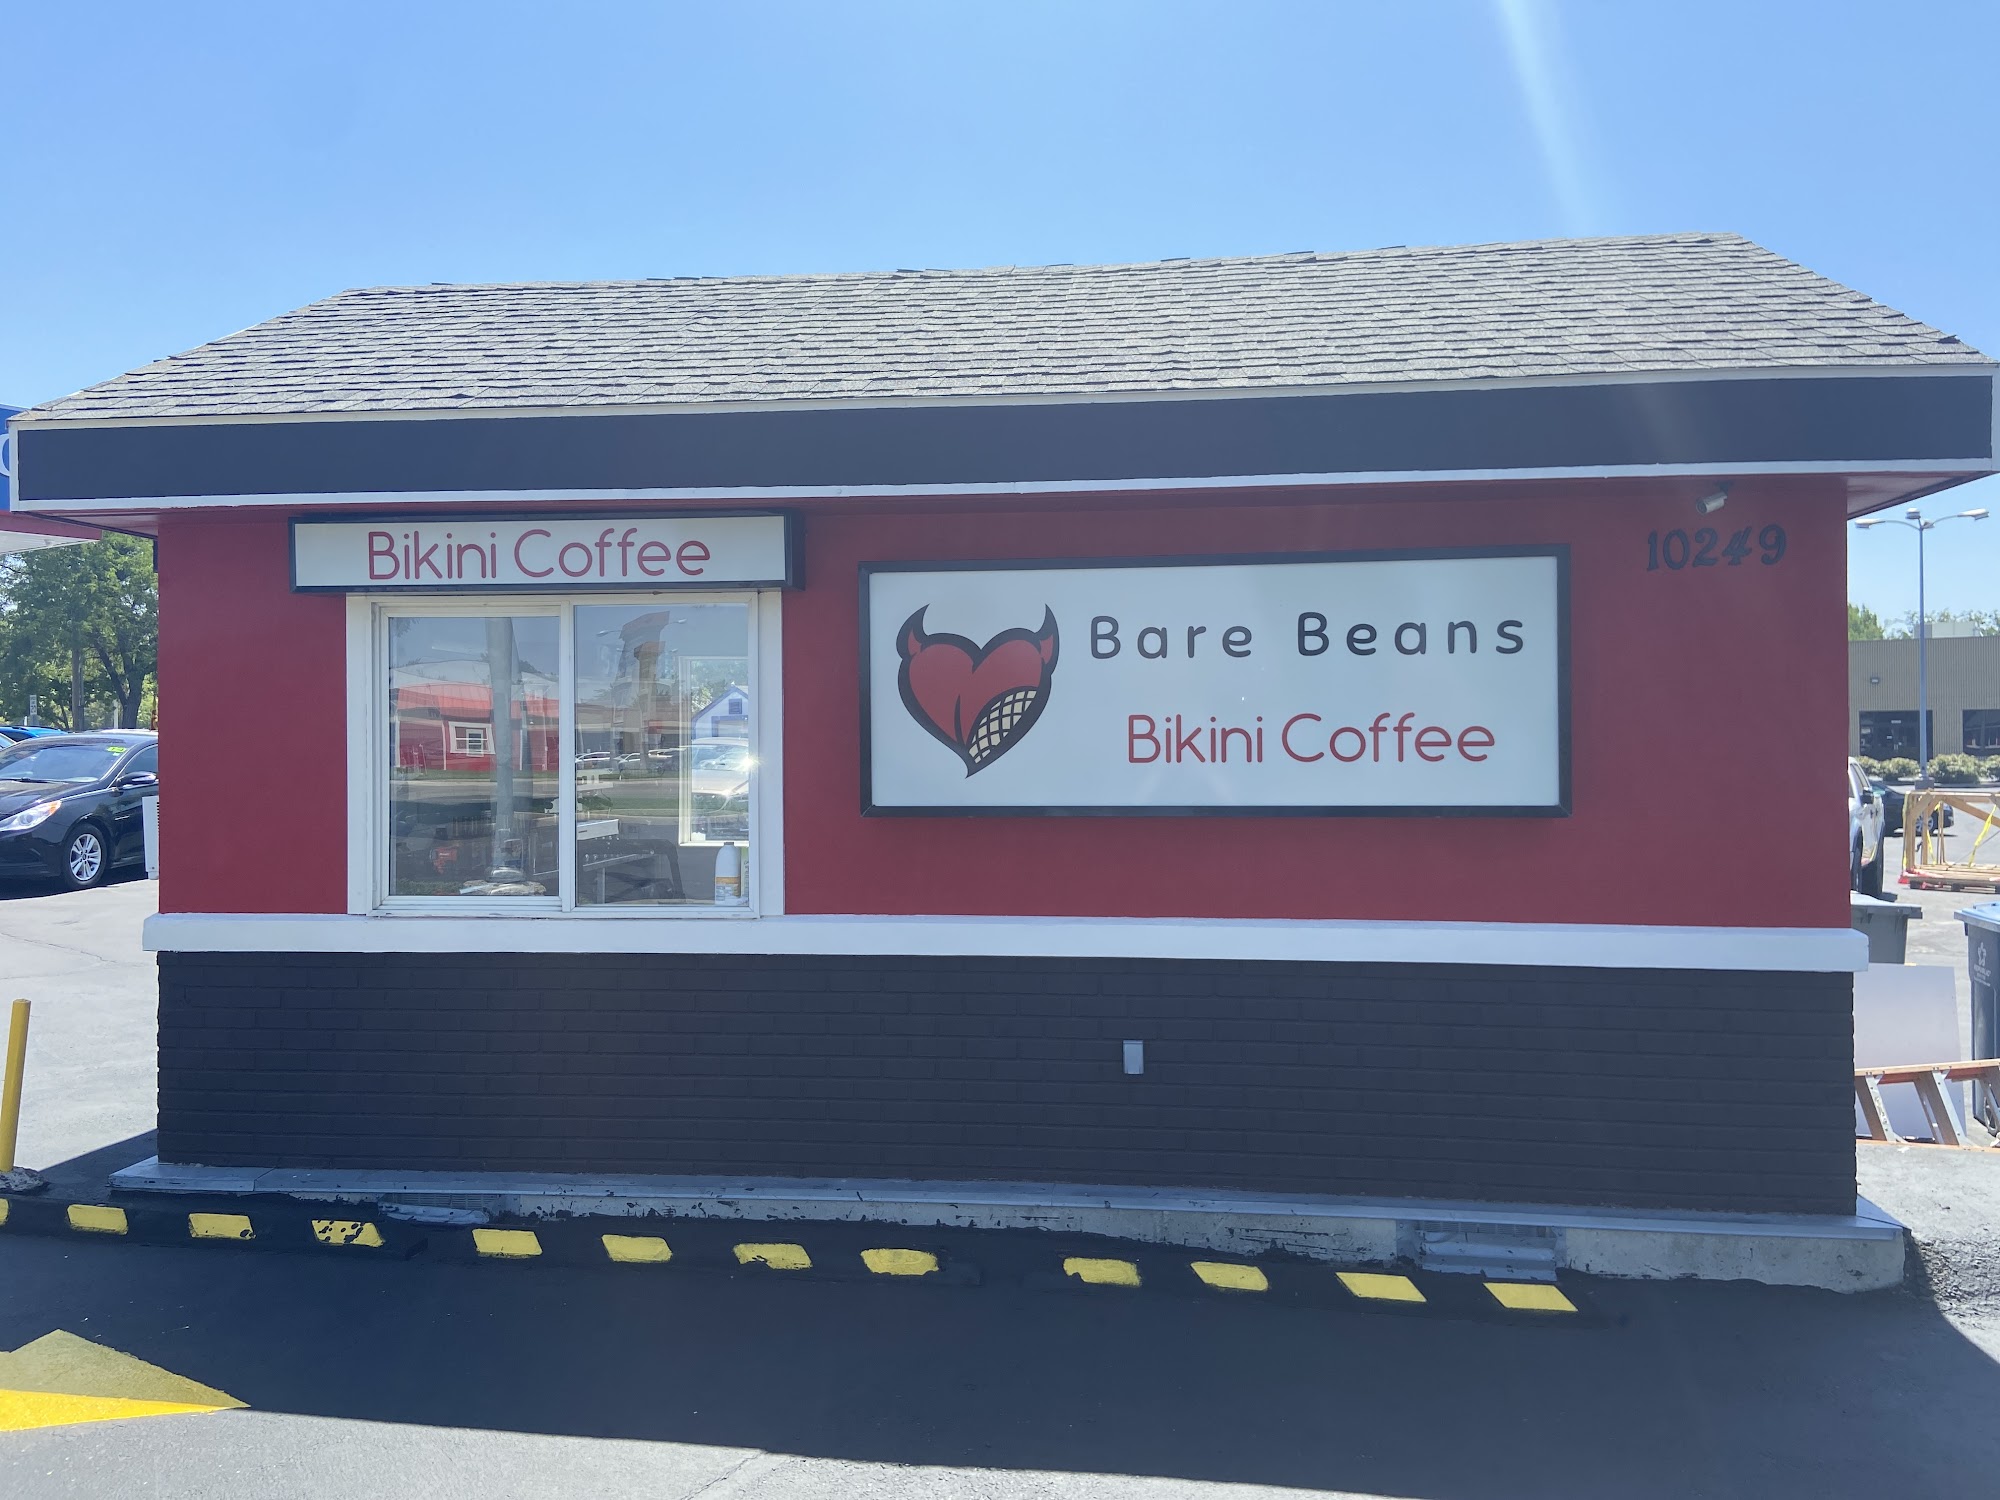 Bare Beans Bikini Coffee